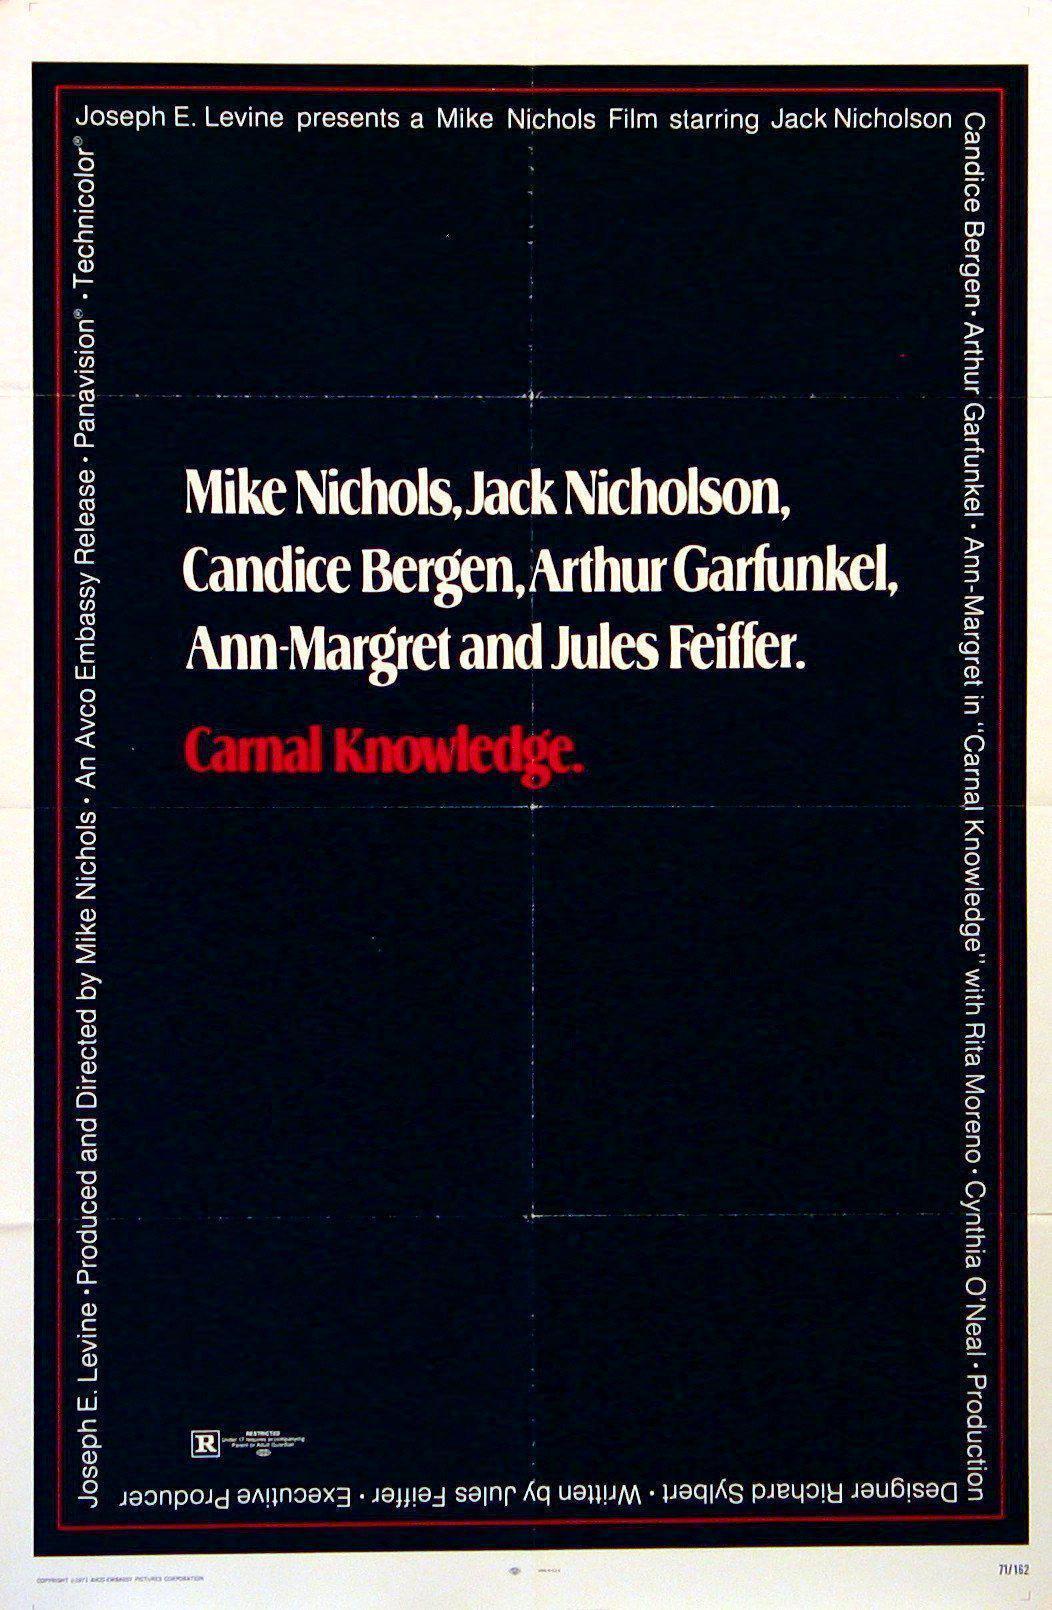 Carnal Knowledge 1 Sheet (27x41) Original Vintage Movie Poster